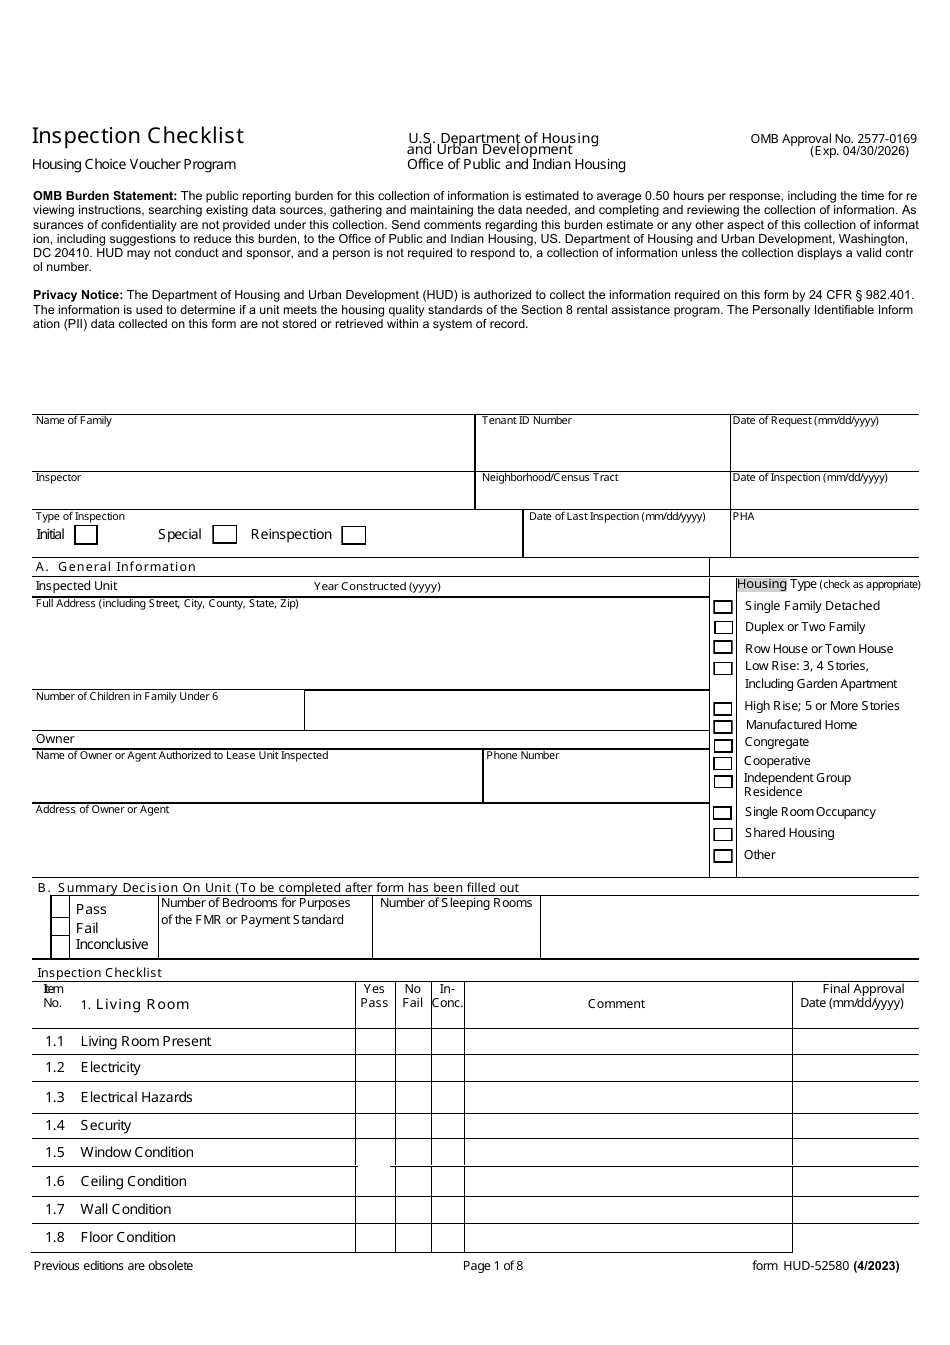 Form HUD-52580 Inspection Checklist - Housing Choice Voucher Program, Page 1